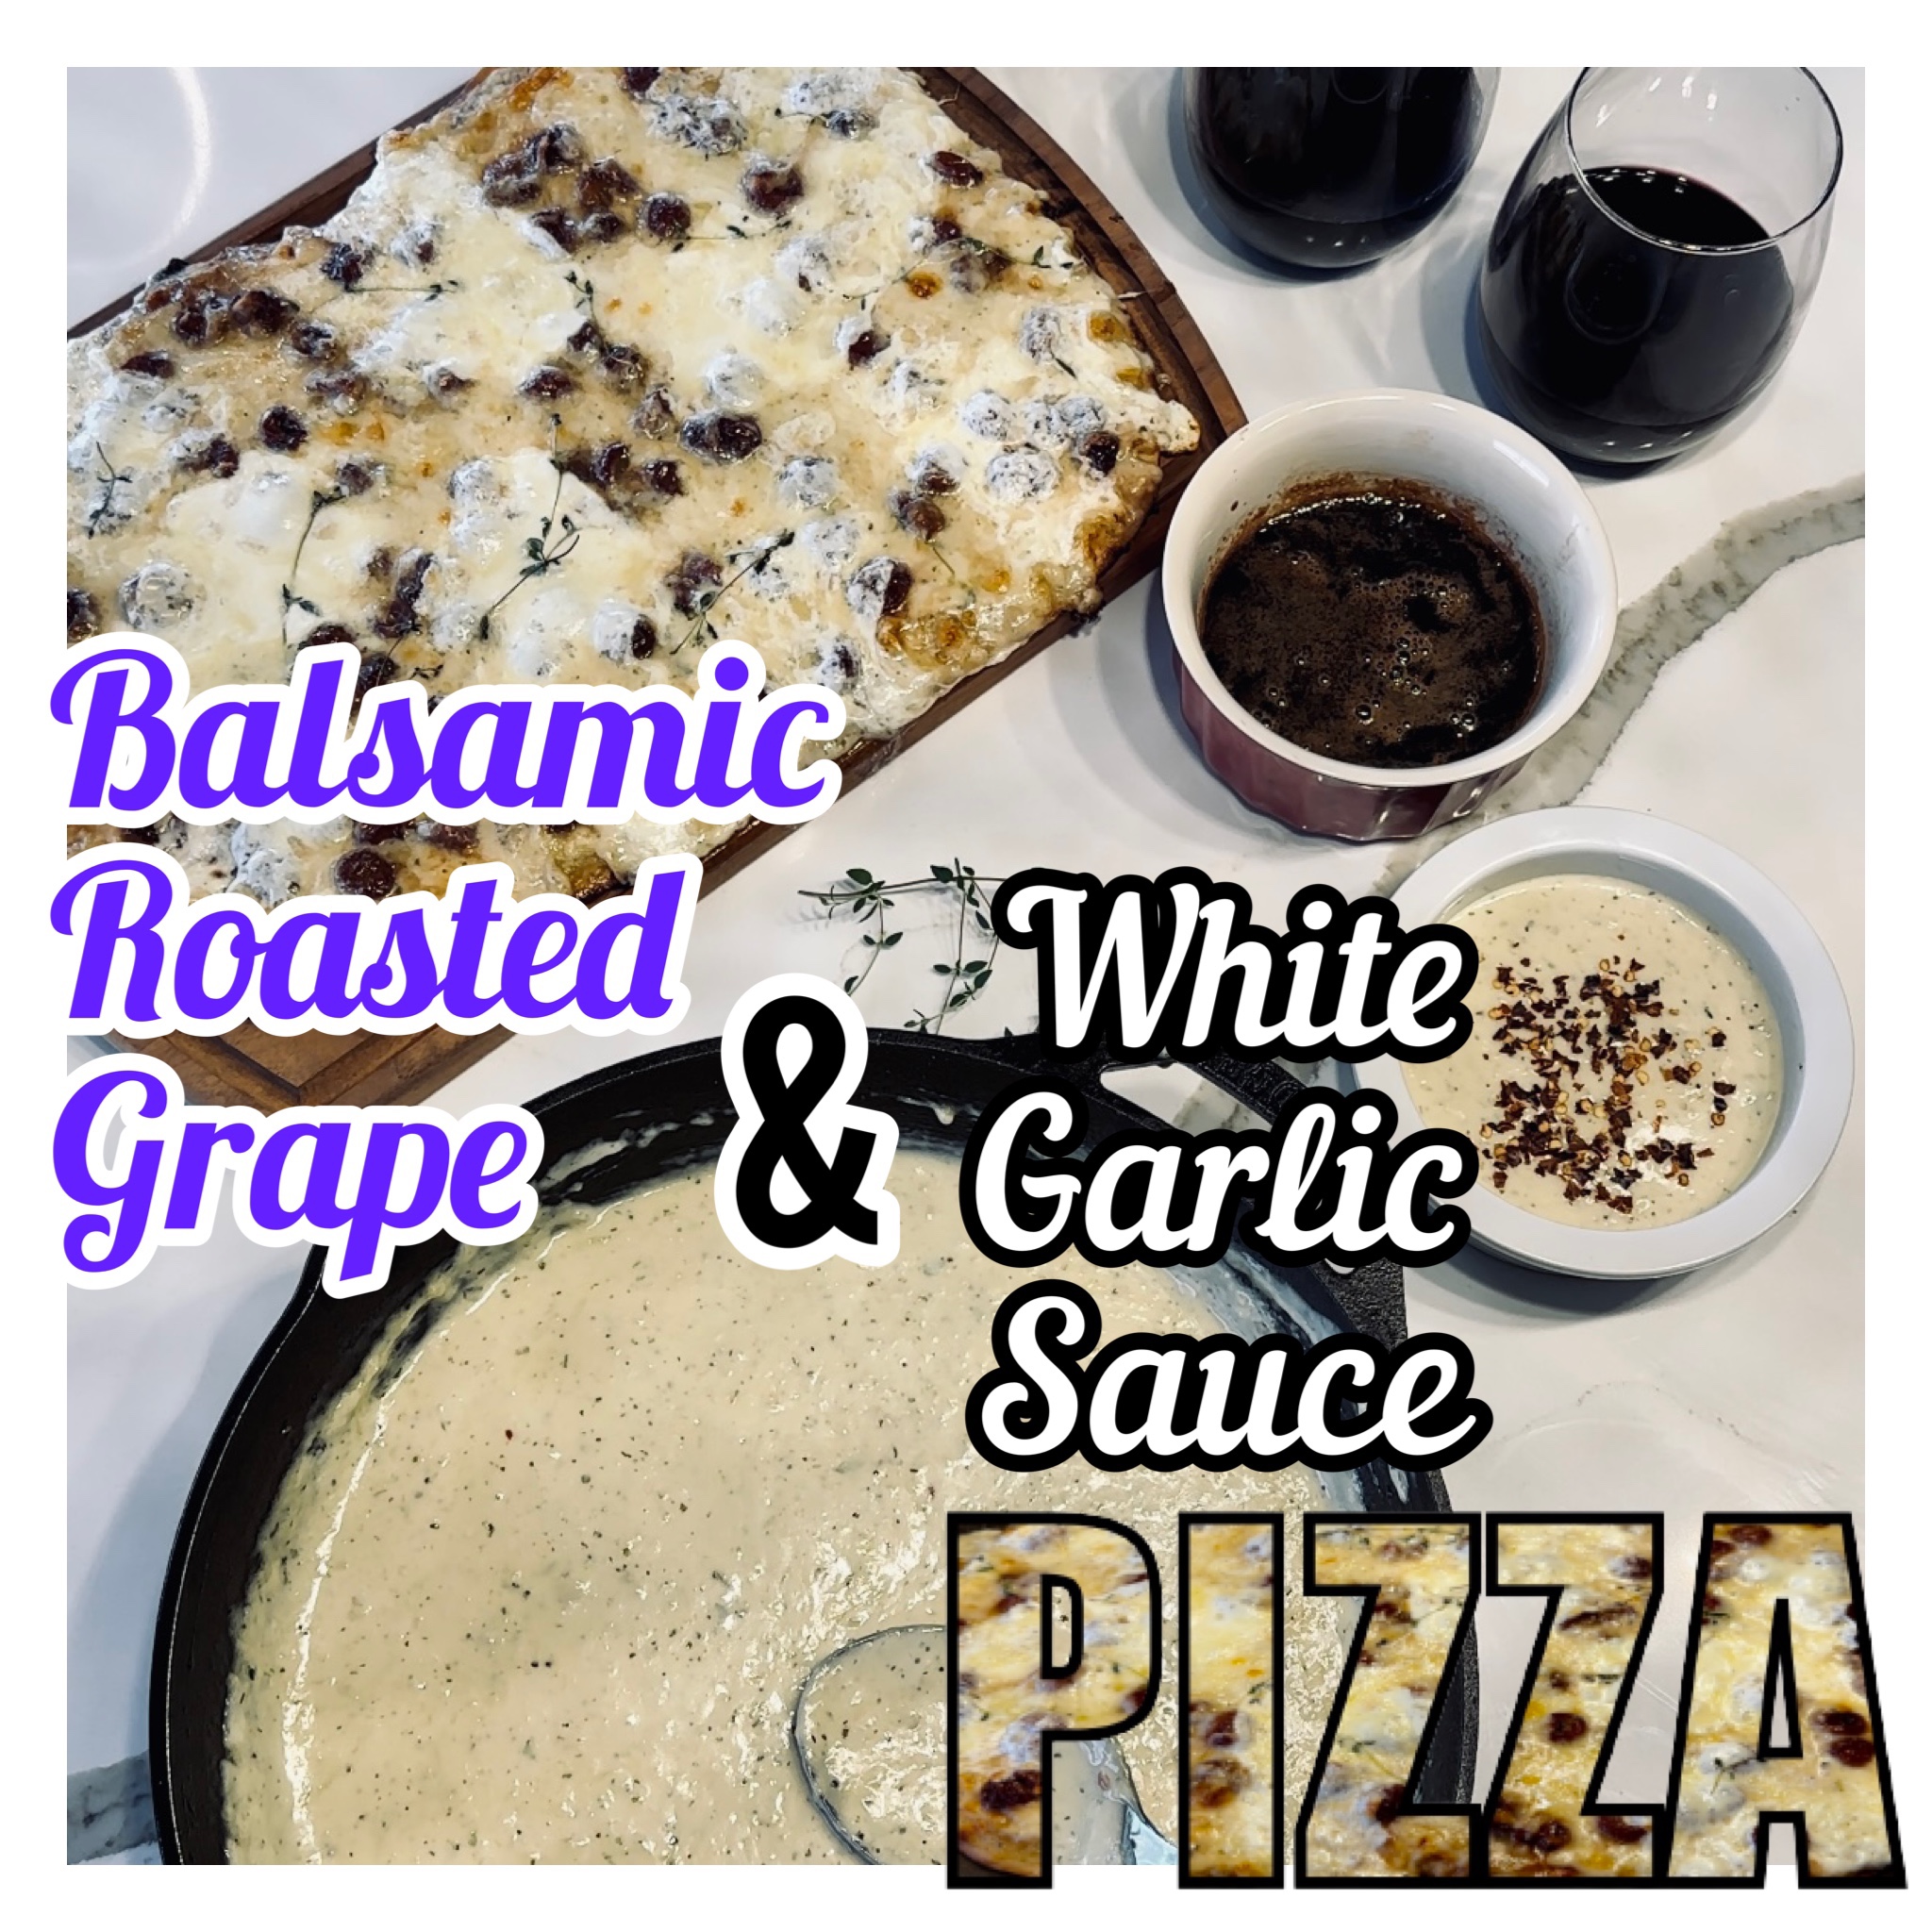 Balsamic Roasted Grape & White Garlic Sauce Pizza
Mason Martinez
Chef Six-Pack
ChefSixPack.com
IG & Twitter: @chefsixpack